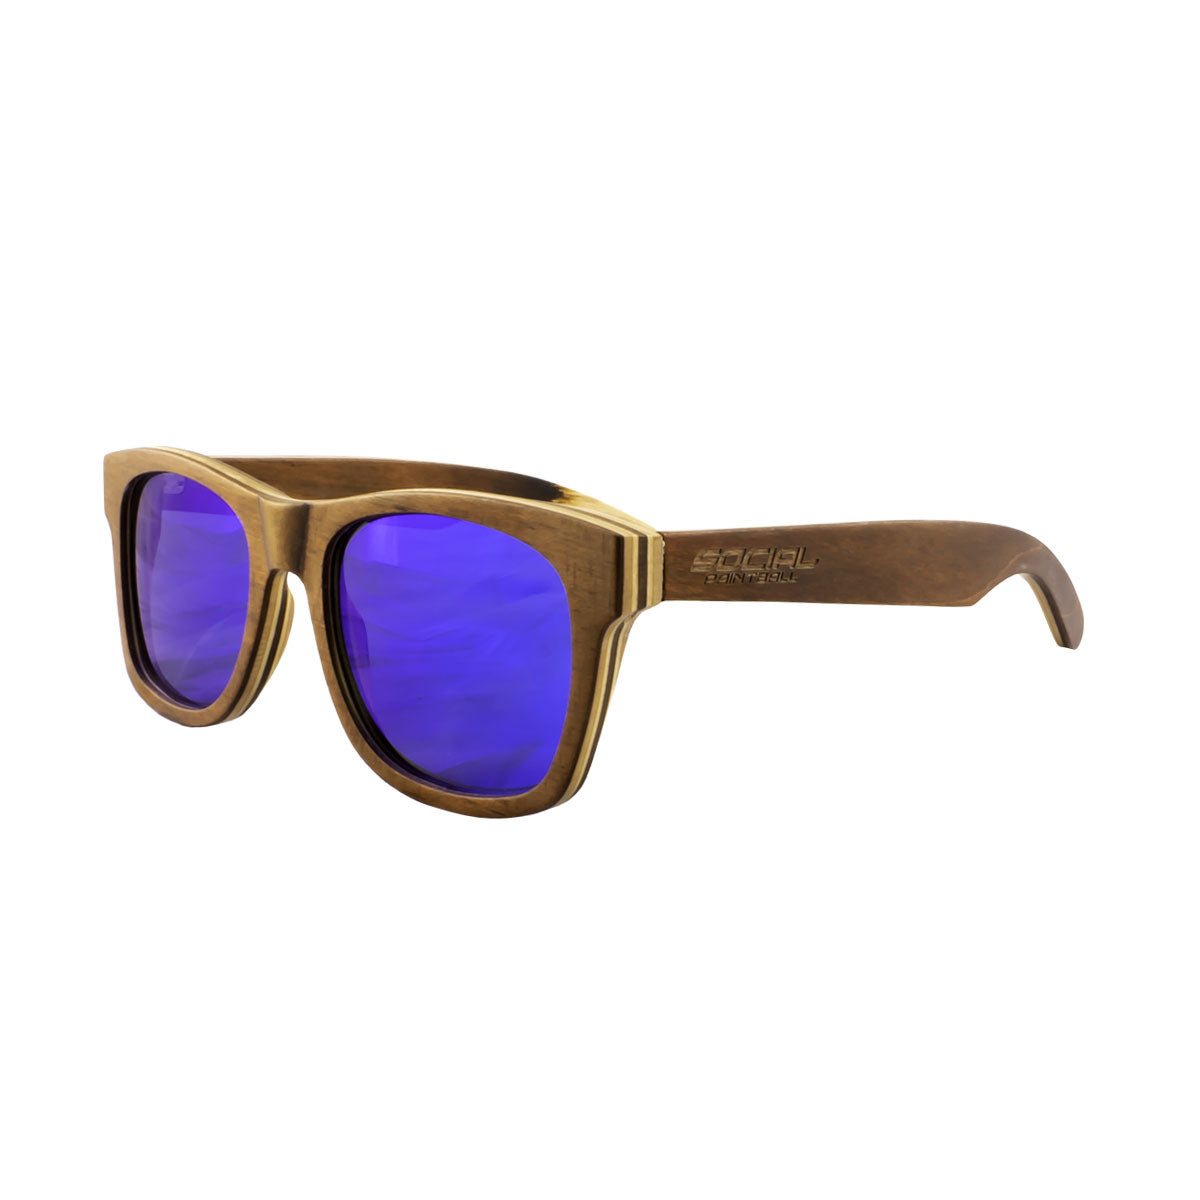 Skateboard Wood Sunglasses, Blue Mirror Lens